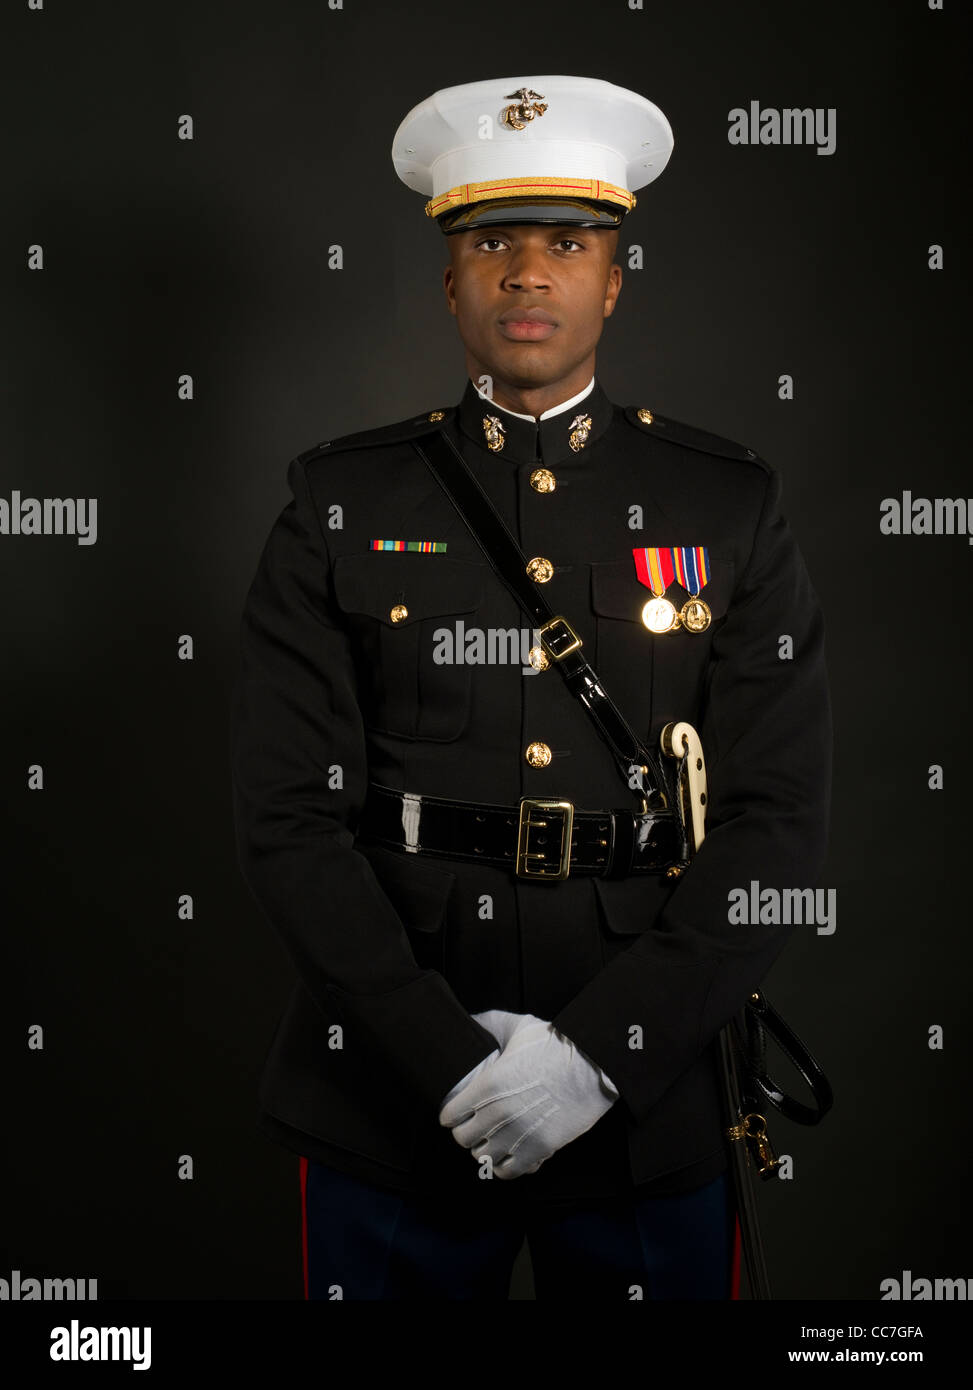 The Marine Corps Uniform 80